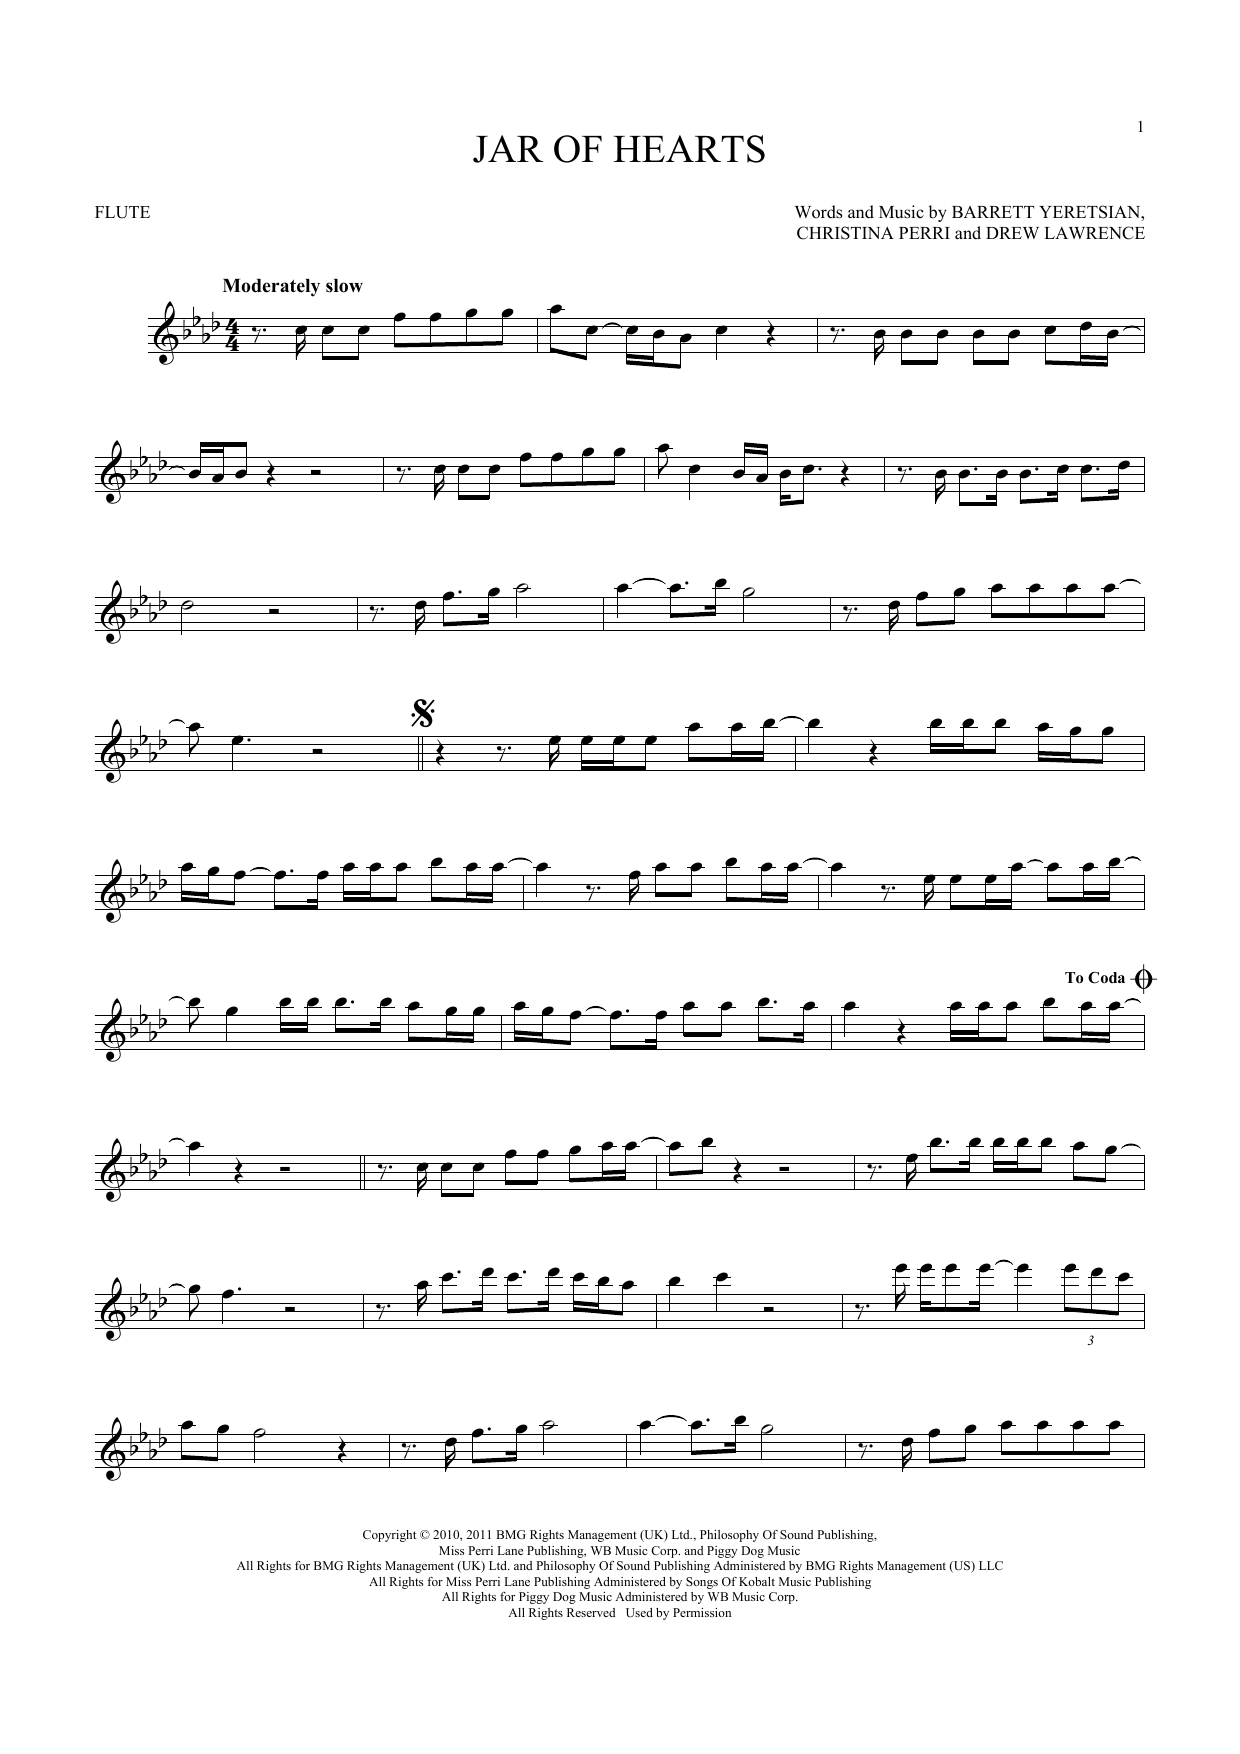 Jar Of Hearts Chords Christina Perri Jar Of Hearts Sheet Music Notes Chords Download Printable Flute Solo Sku 180594